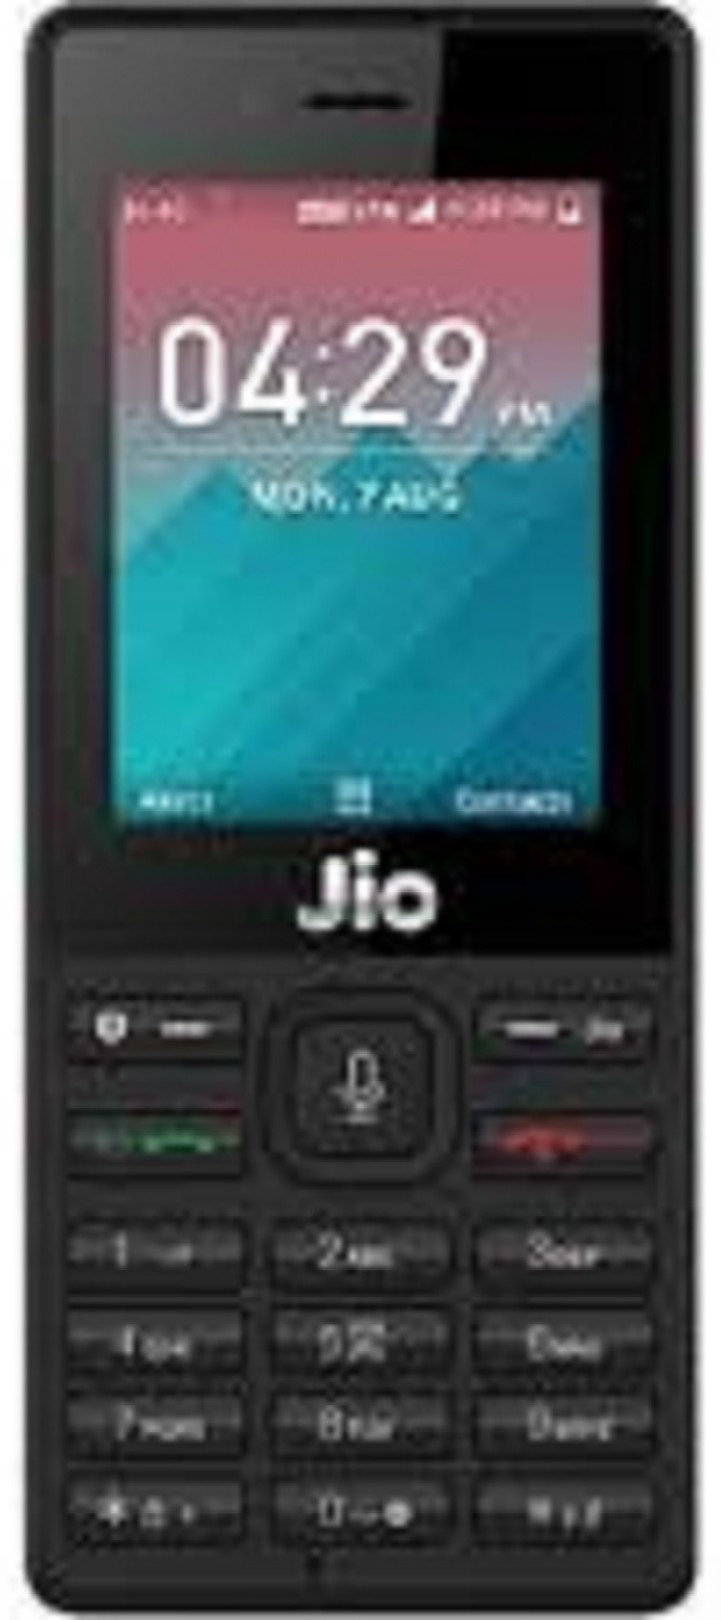 Refurbished Random Model Jio Phone 2.4 Screen Size 2000mAh Battery, Charger & Blue Box Packing & Very good condition - Black